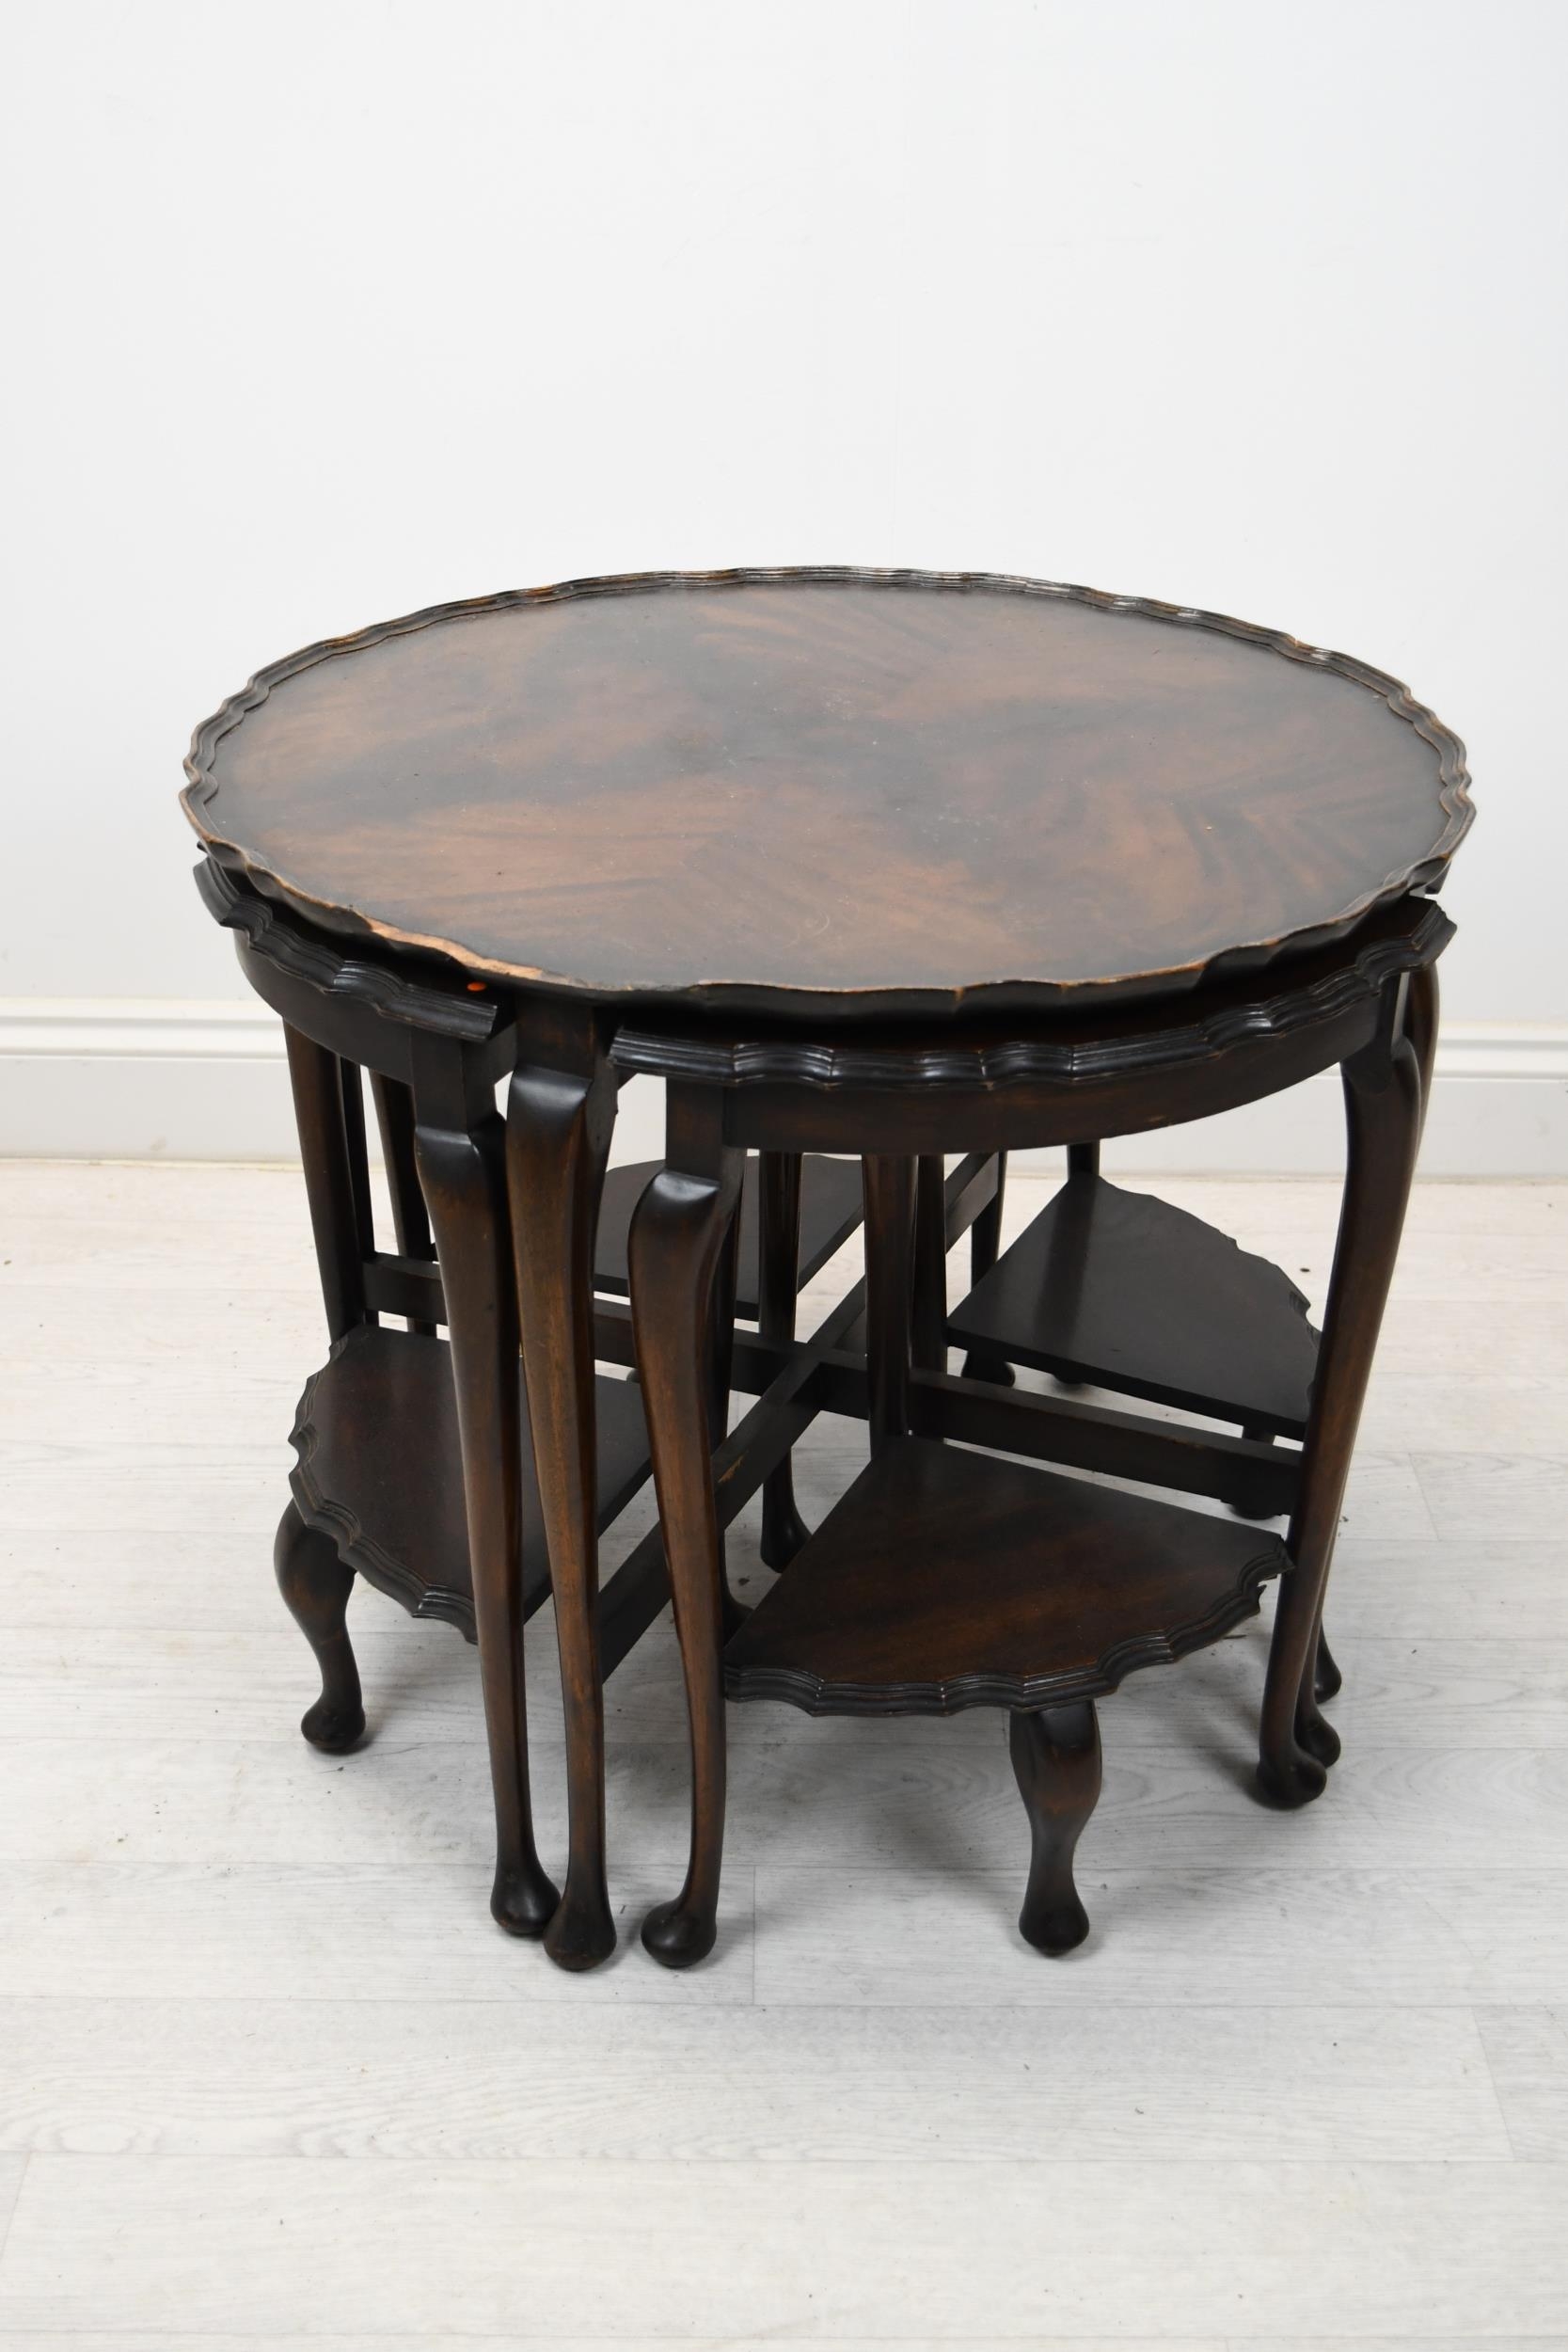 Nest of tables, Georgian style mahogany. H.58, 63cm diameter